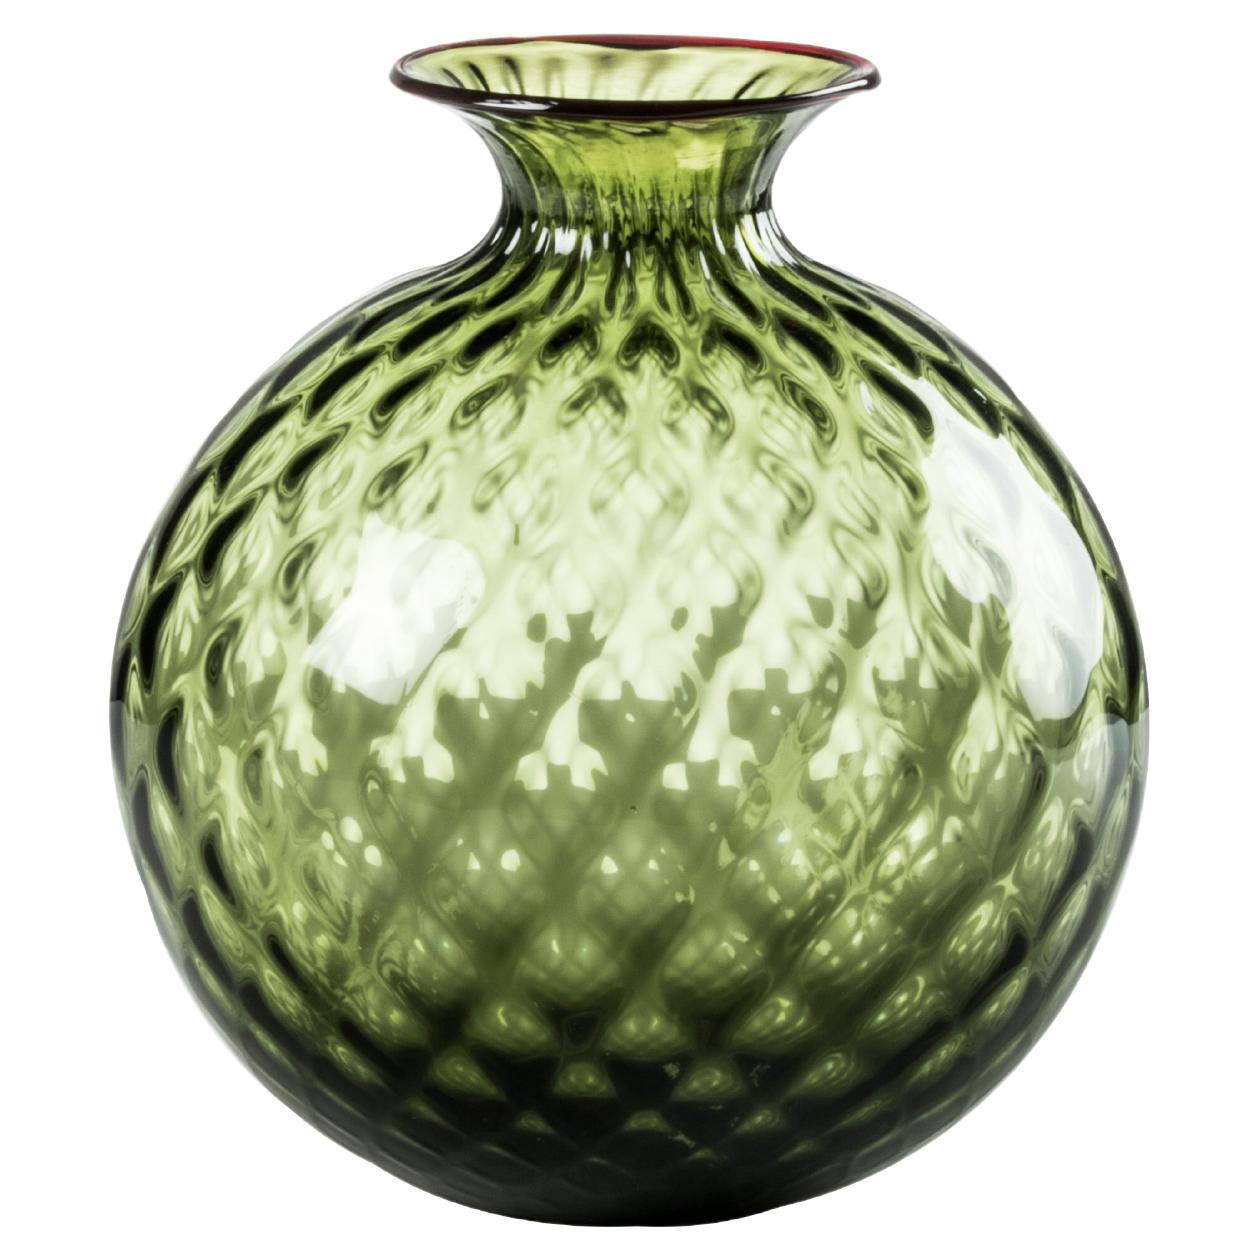 Monofiore Balloton Glass Vase in Apple Green Red Thread by Venini For Sale